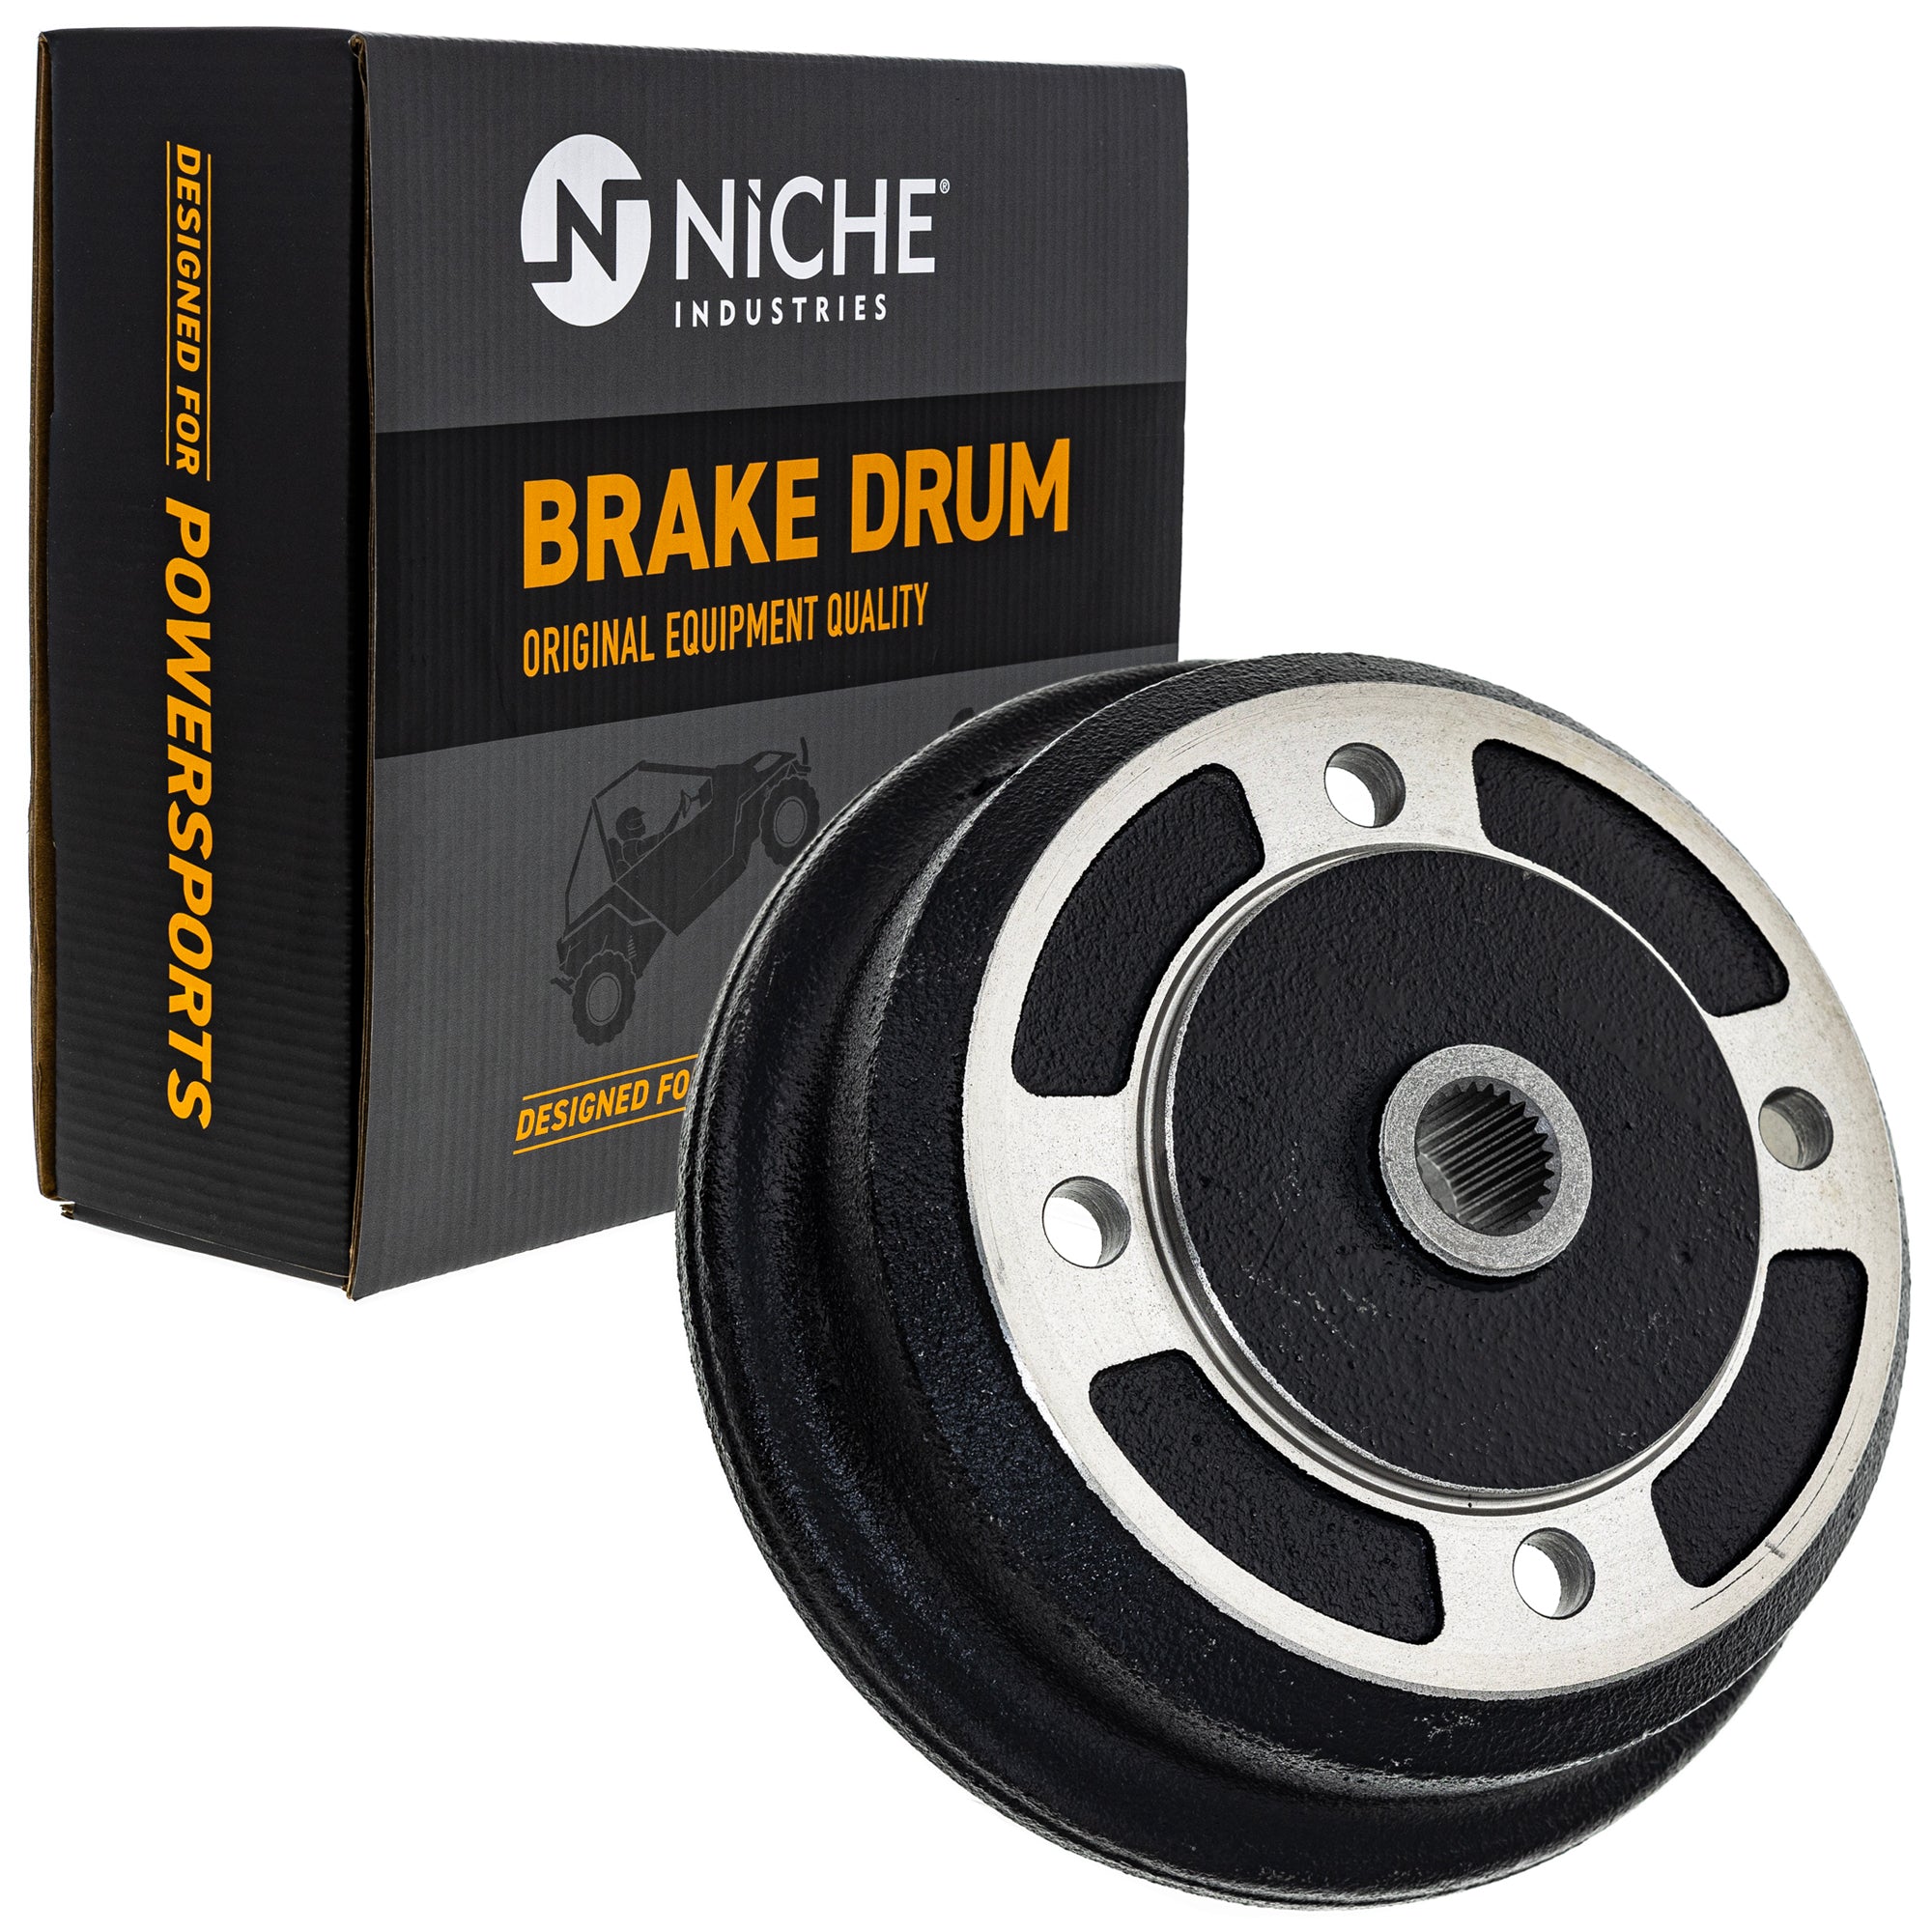 NICHE 519-CBR2223D Drum Brake for Mule